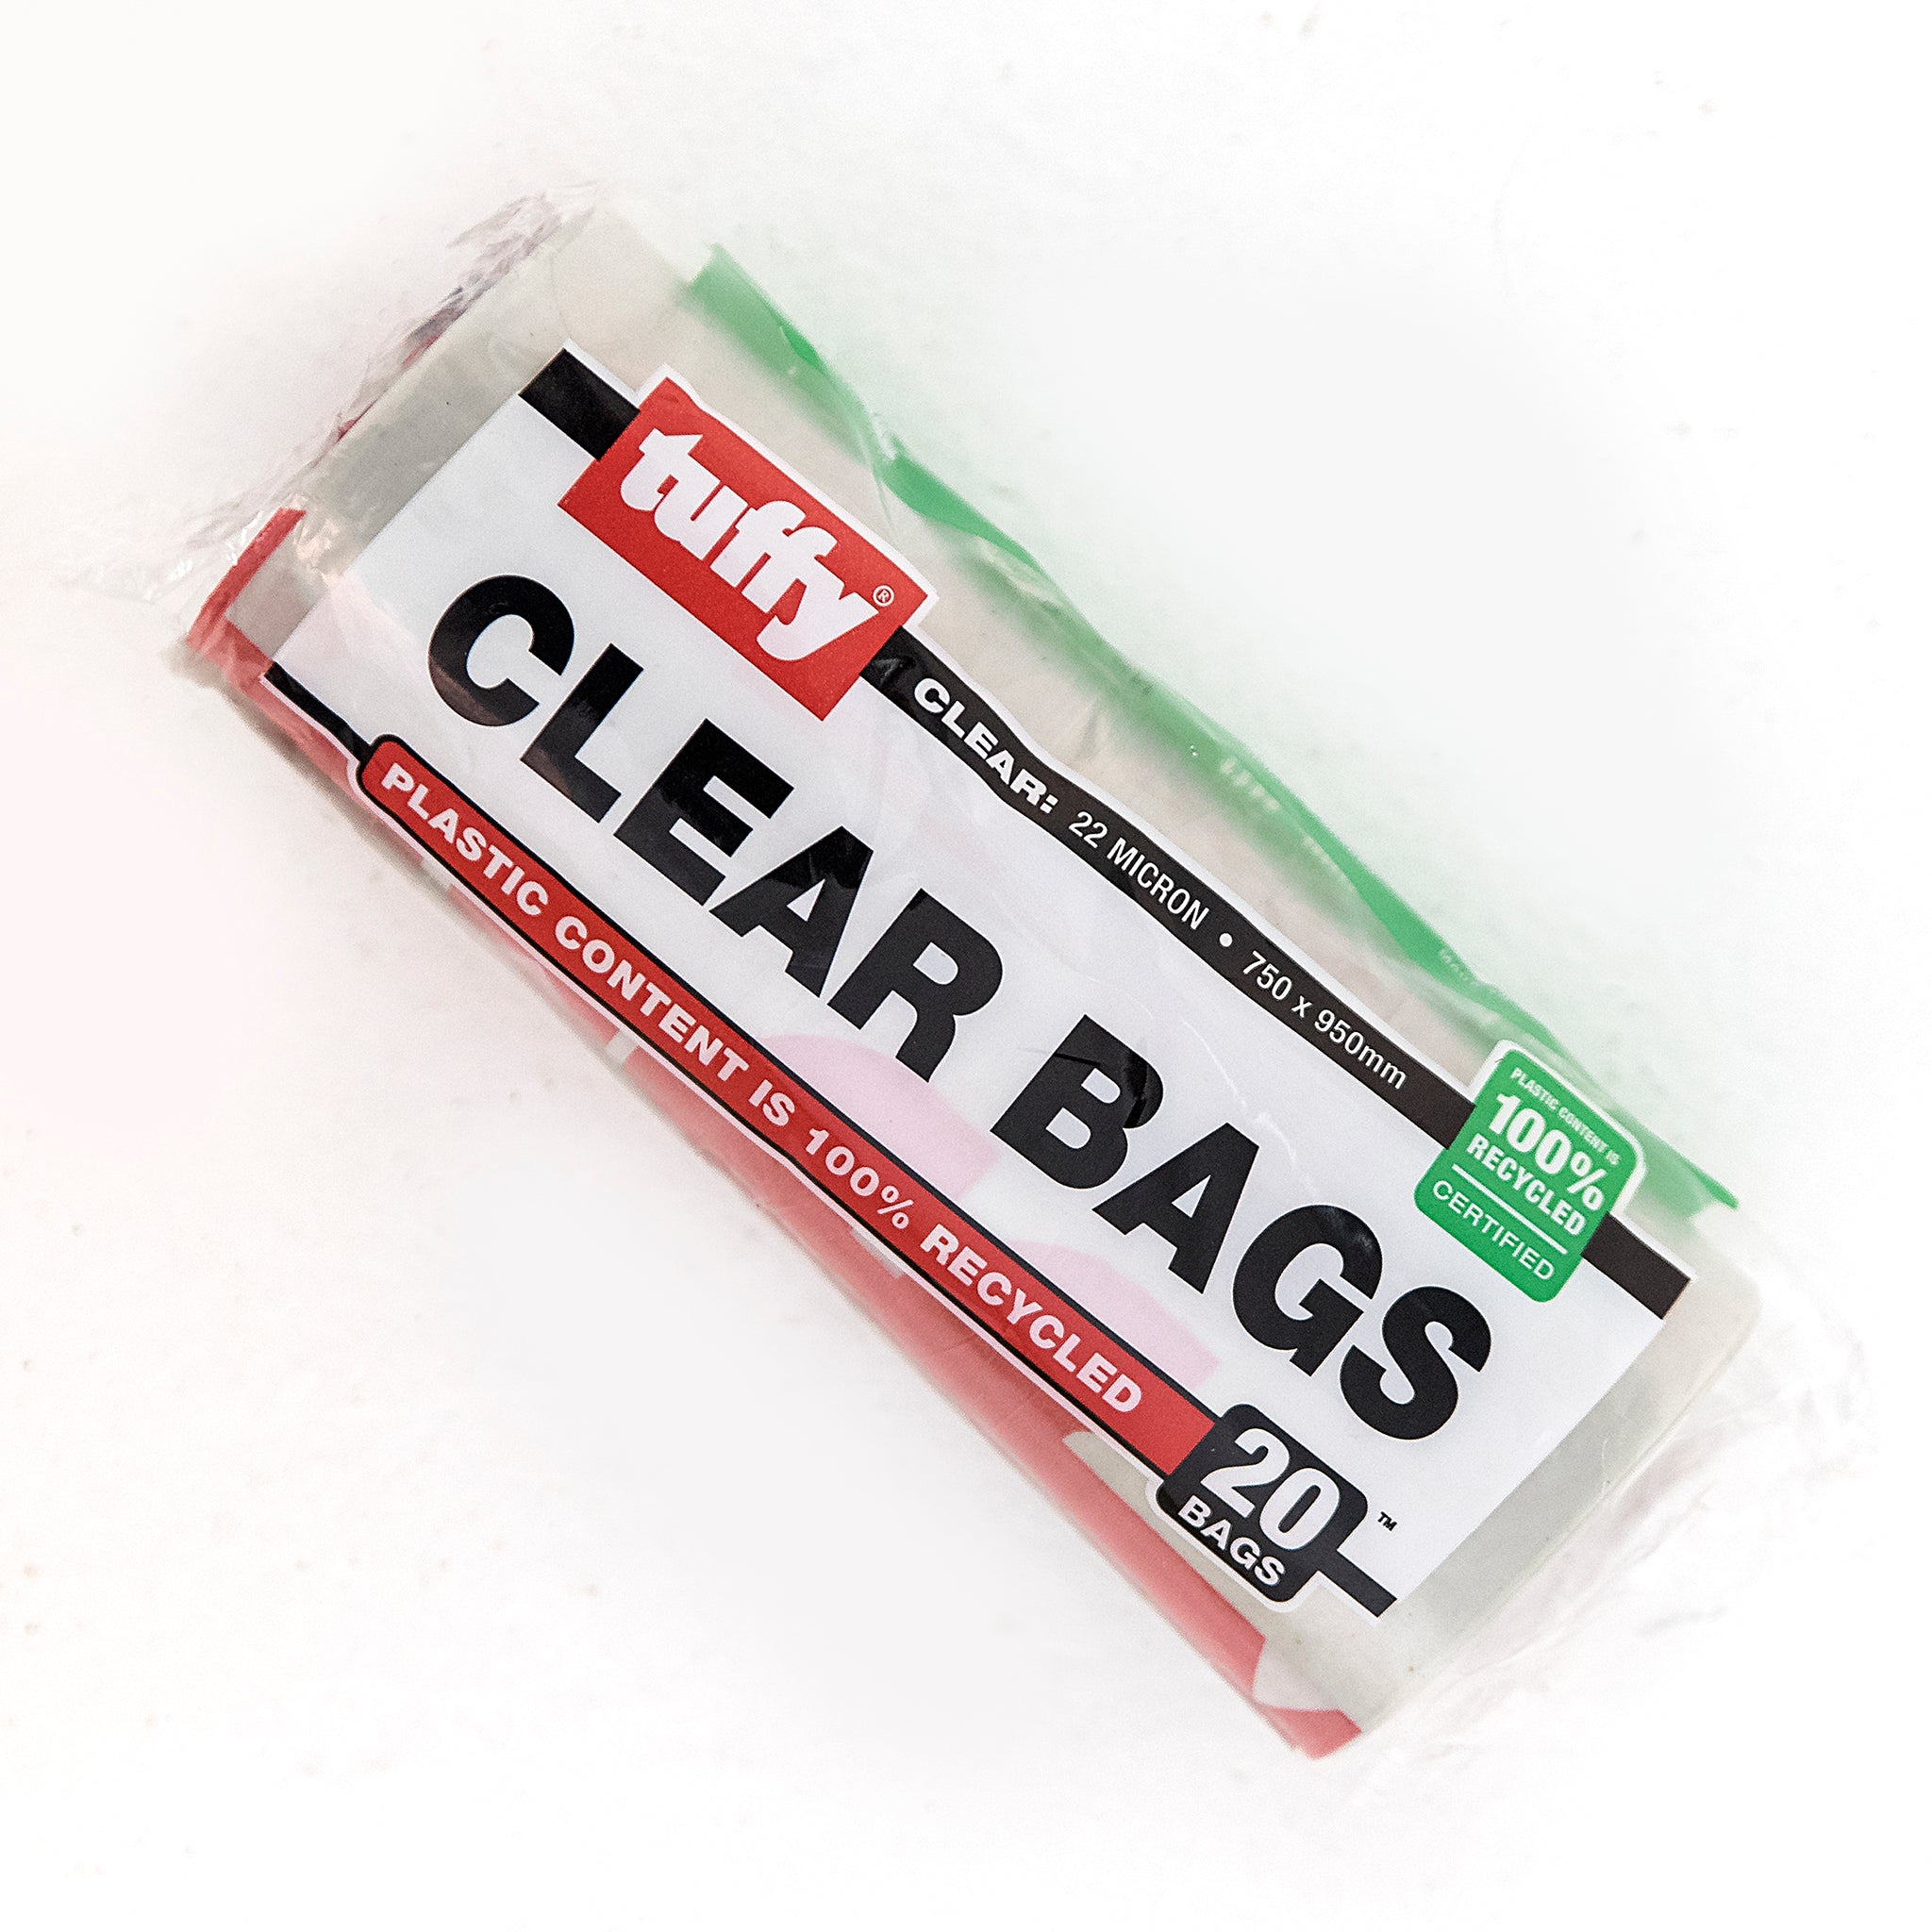 Presto Clear Trash 30 Gallon Flap Top Bags, 20 Count